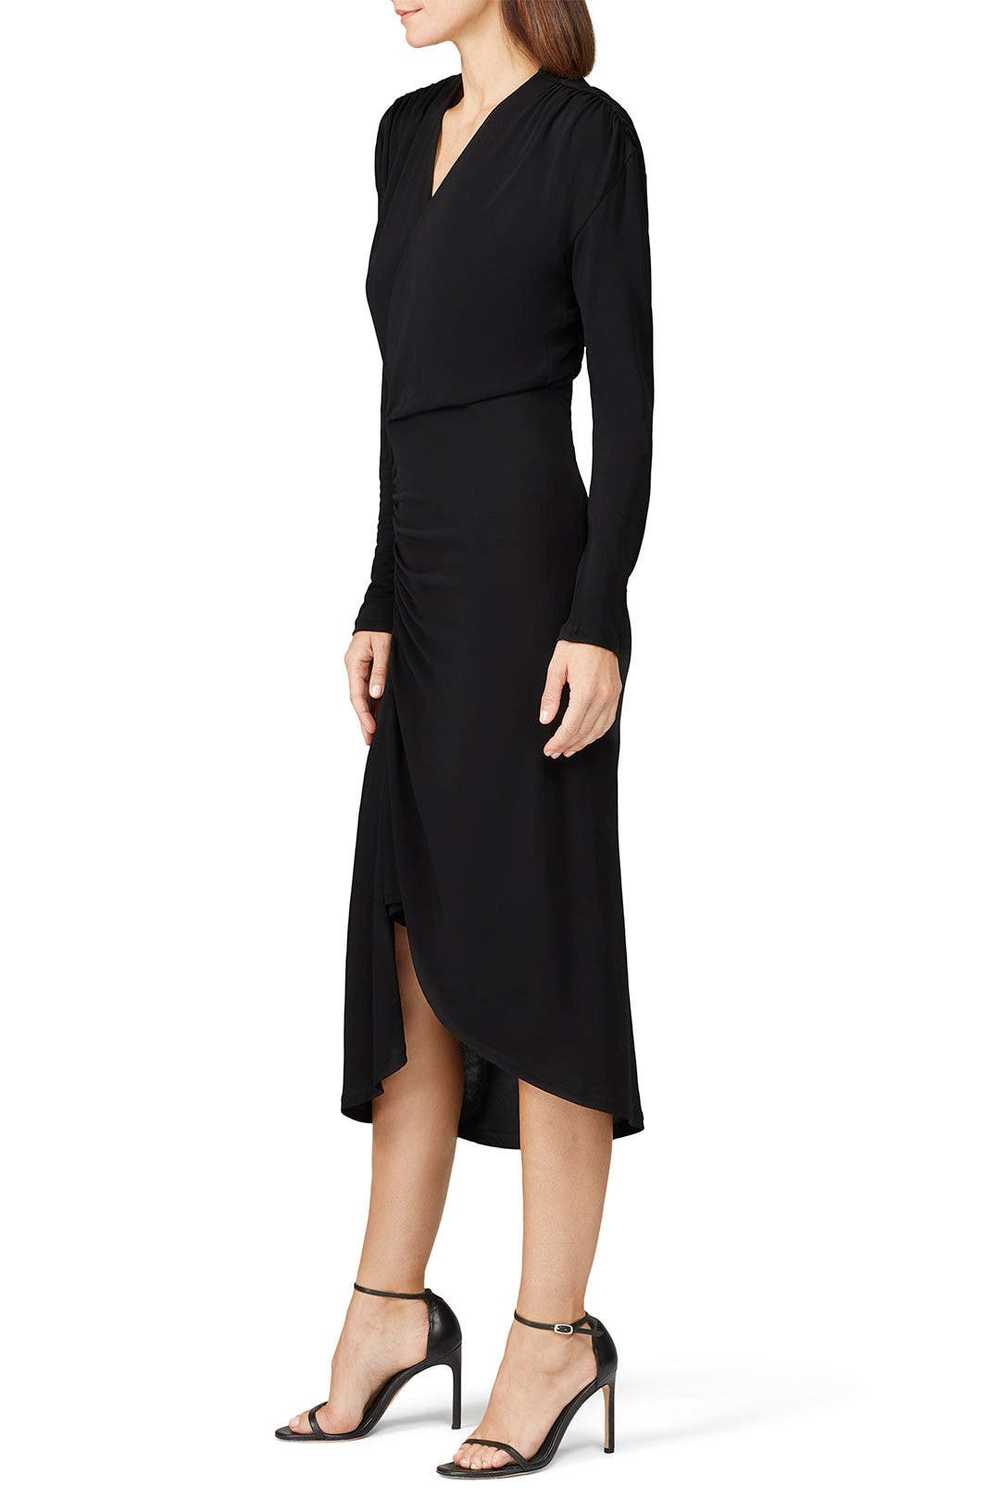 Atlein Black Long Sleeve Ruched Dress - image 2